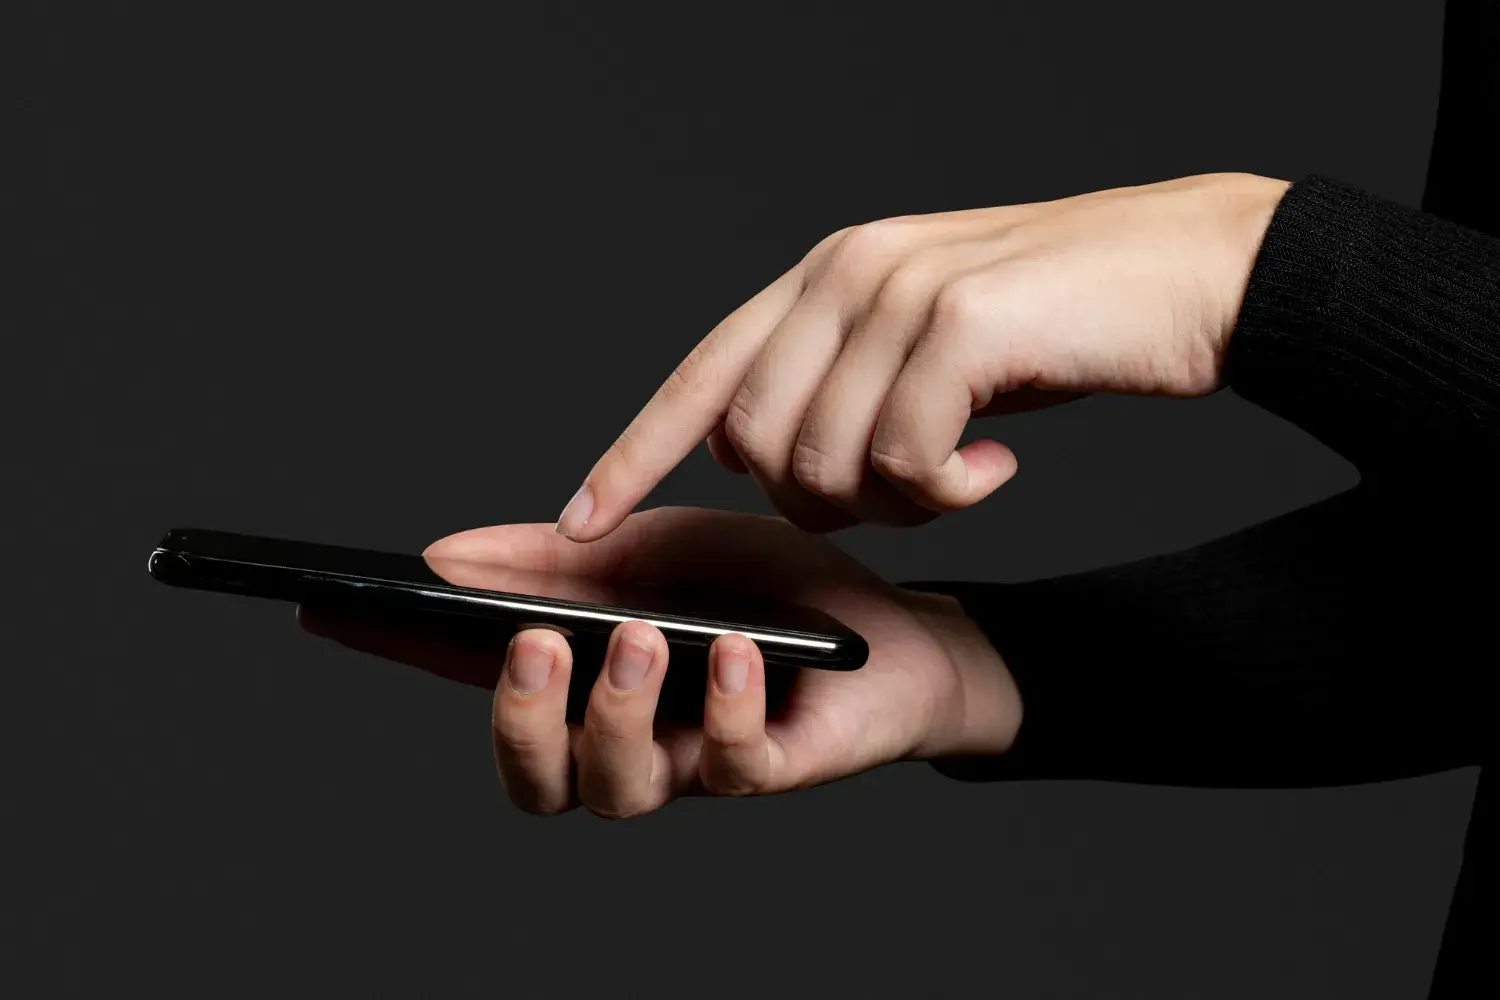 Finger pressing smartphone screen